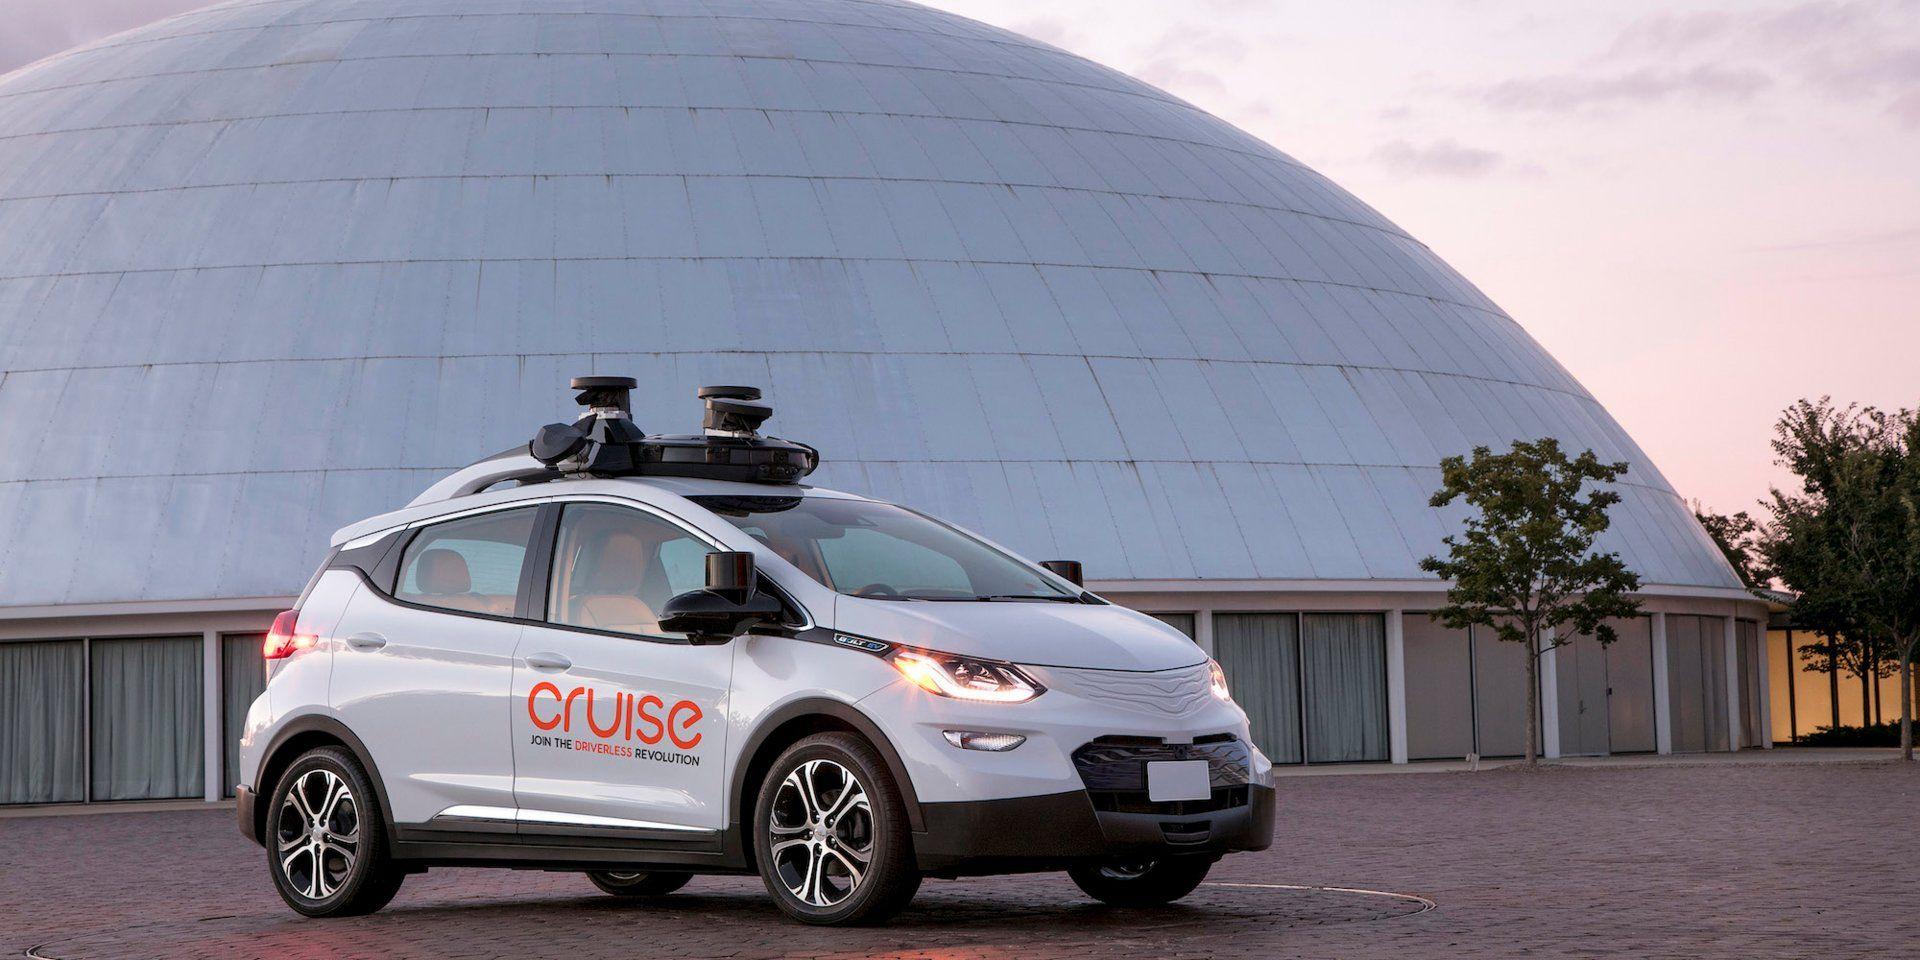 Cruise Autonomous Logo - General Motors' Cruise autonomous vehicles struggle - Business Insider